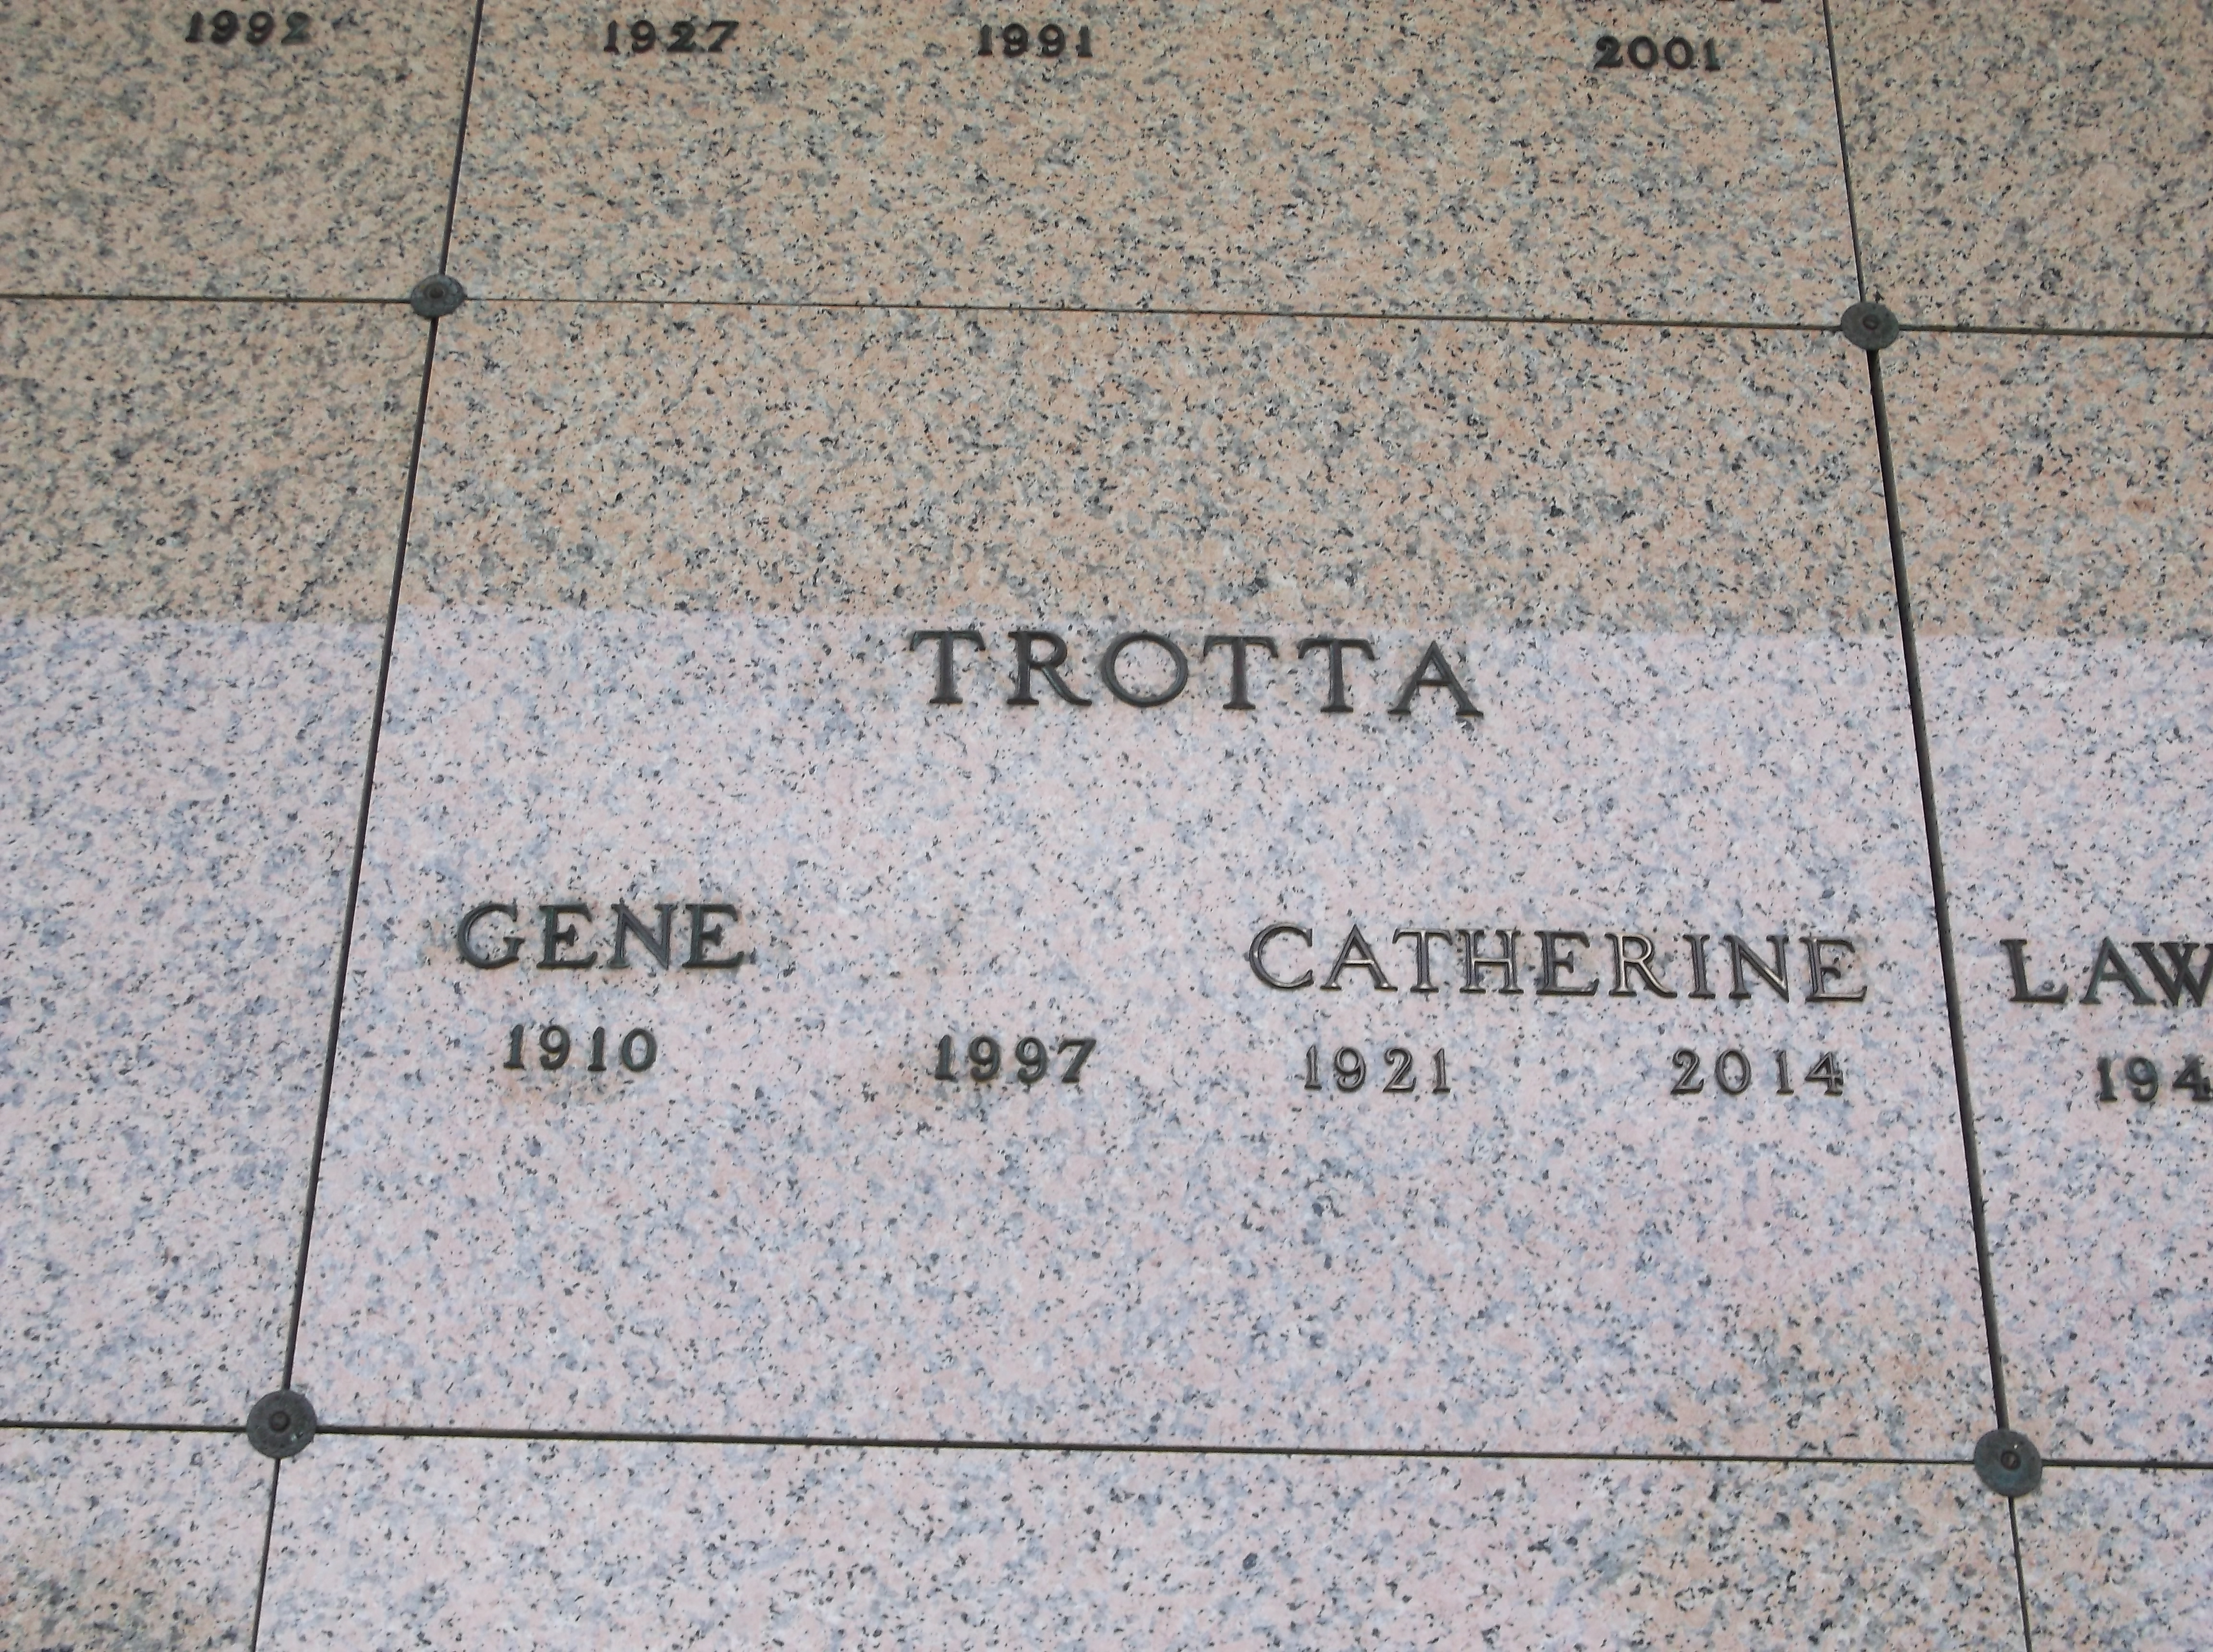 Gene Trotta